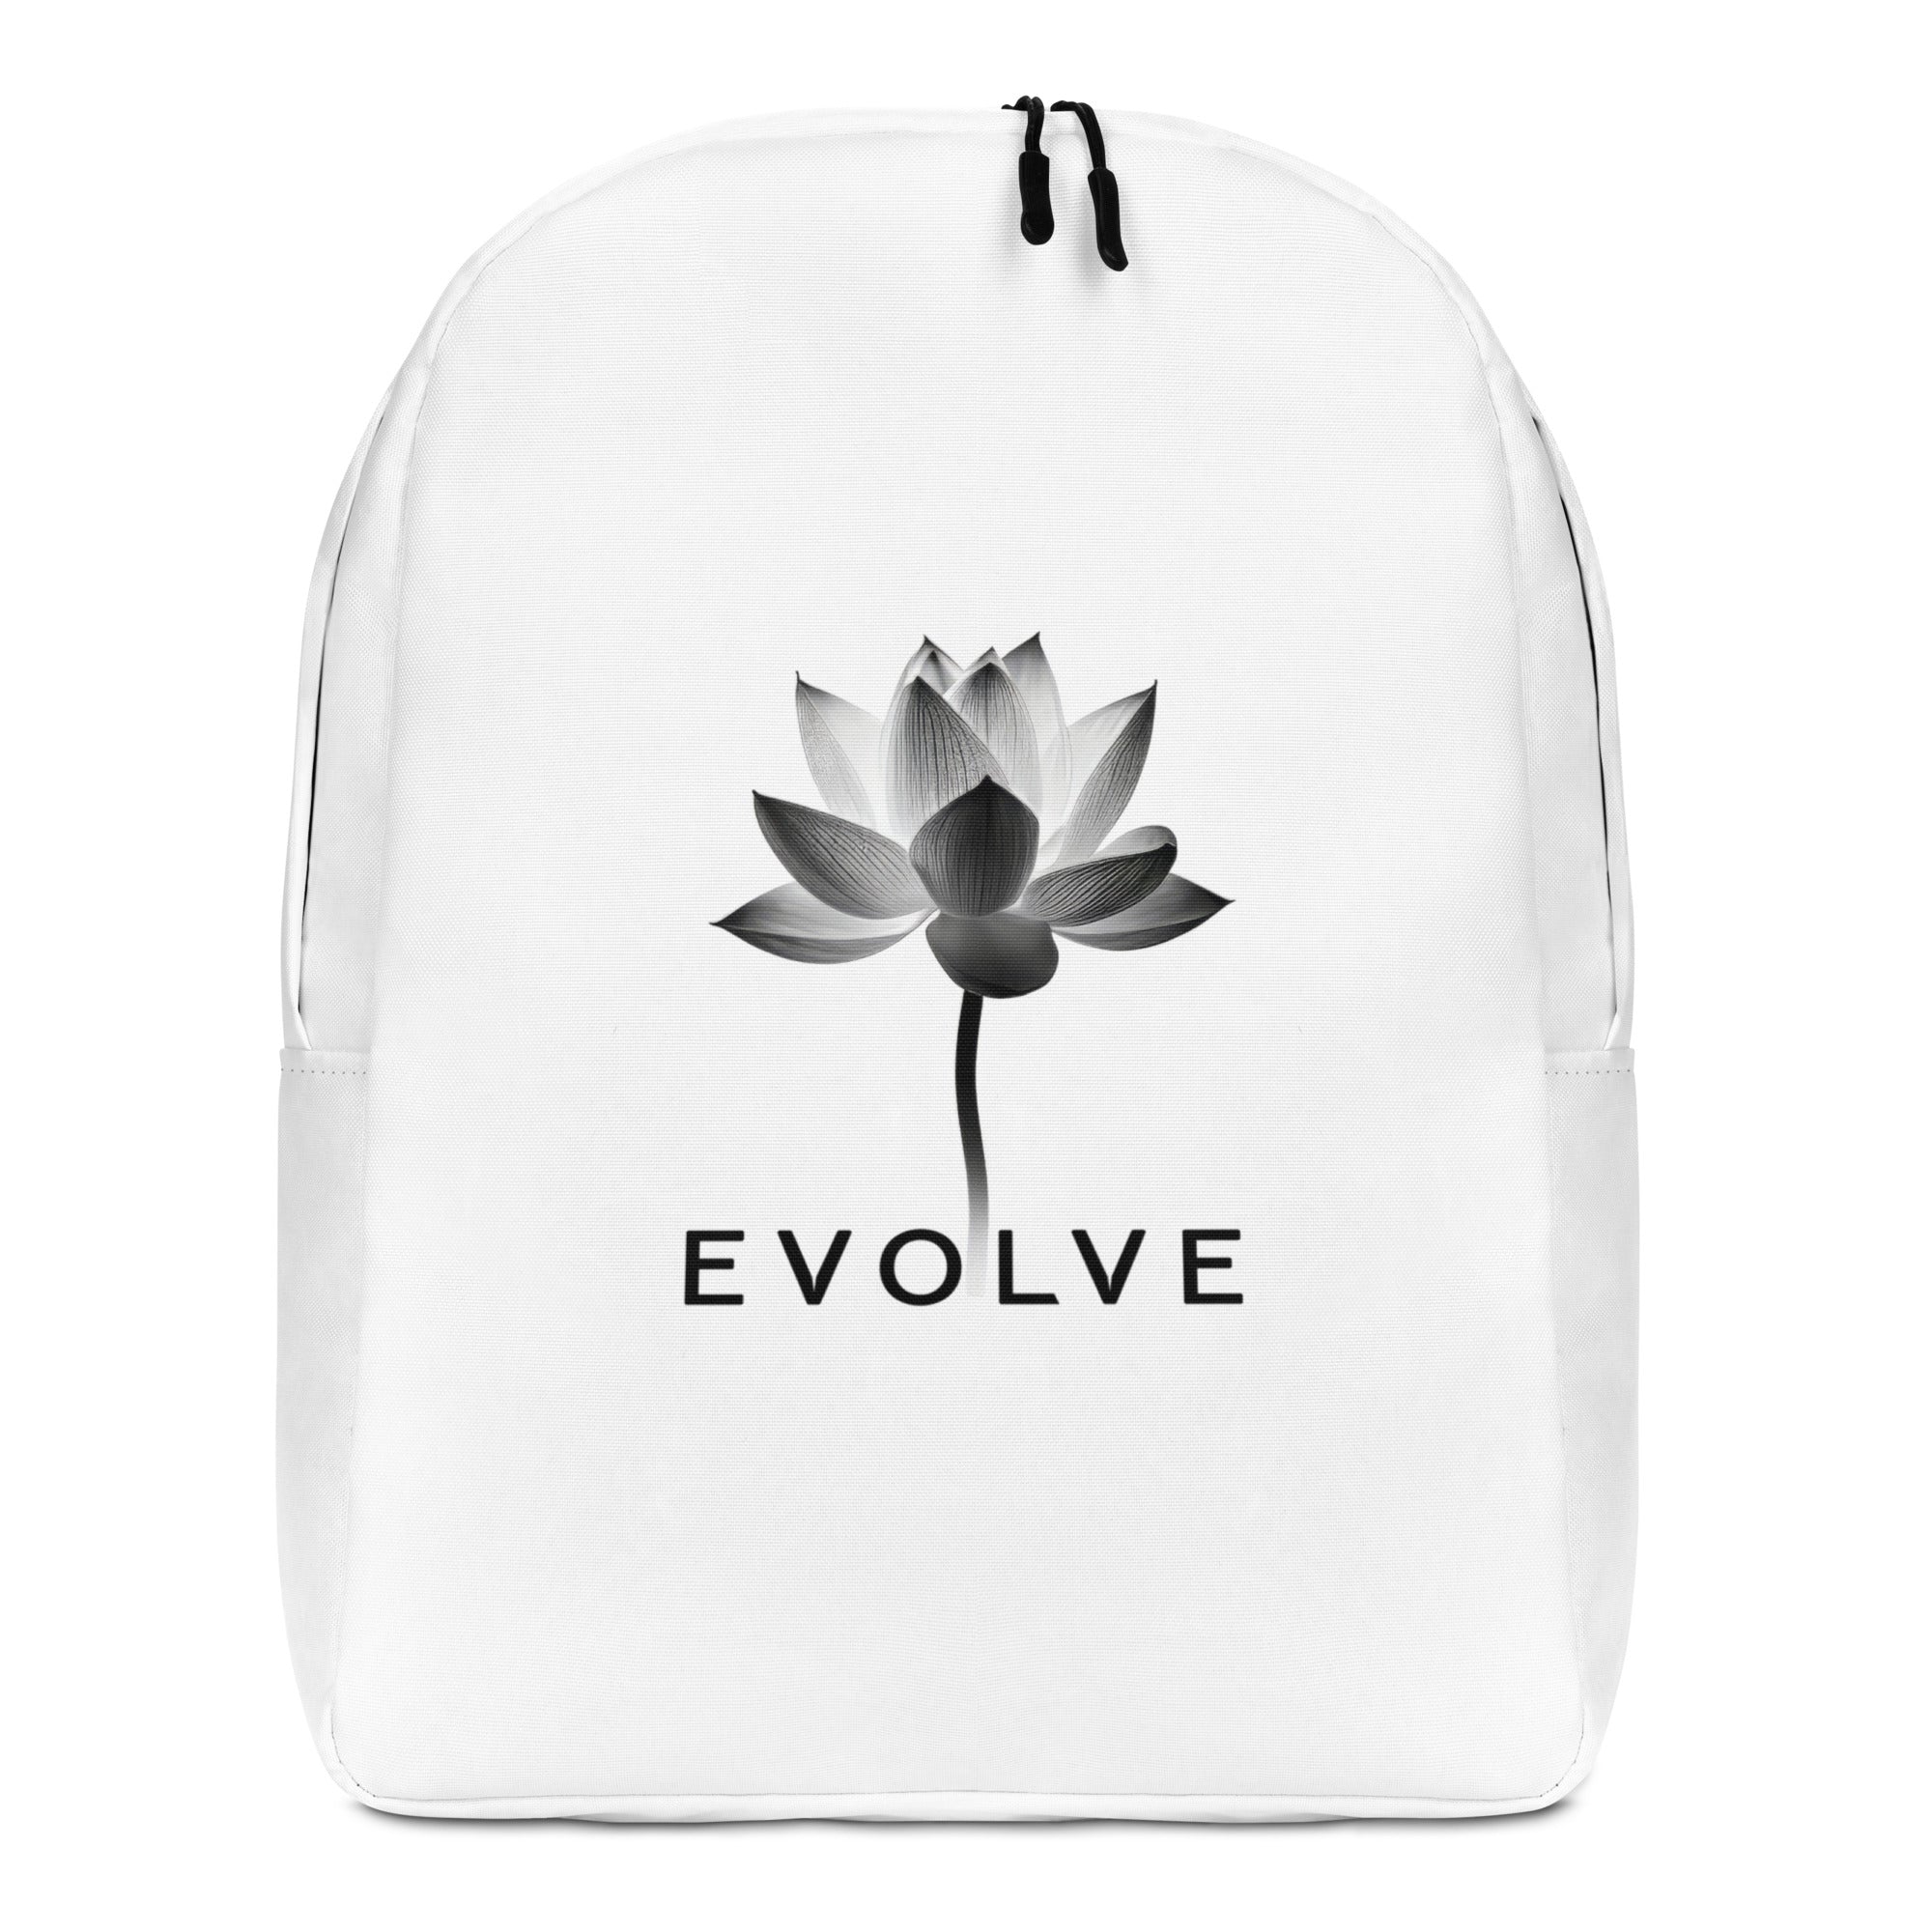 Backpack for School or Travel, Yoga Inspired